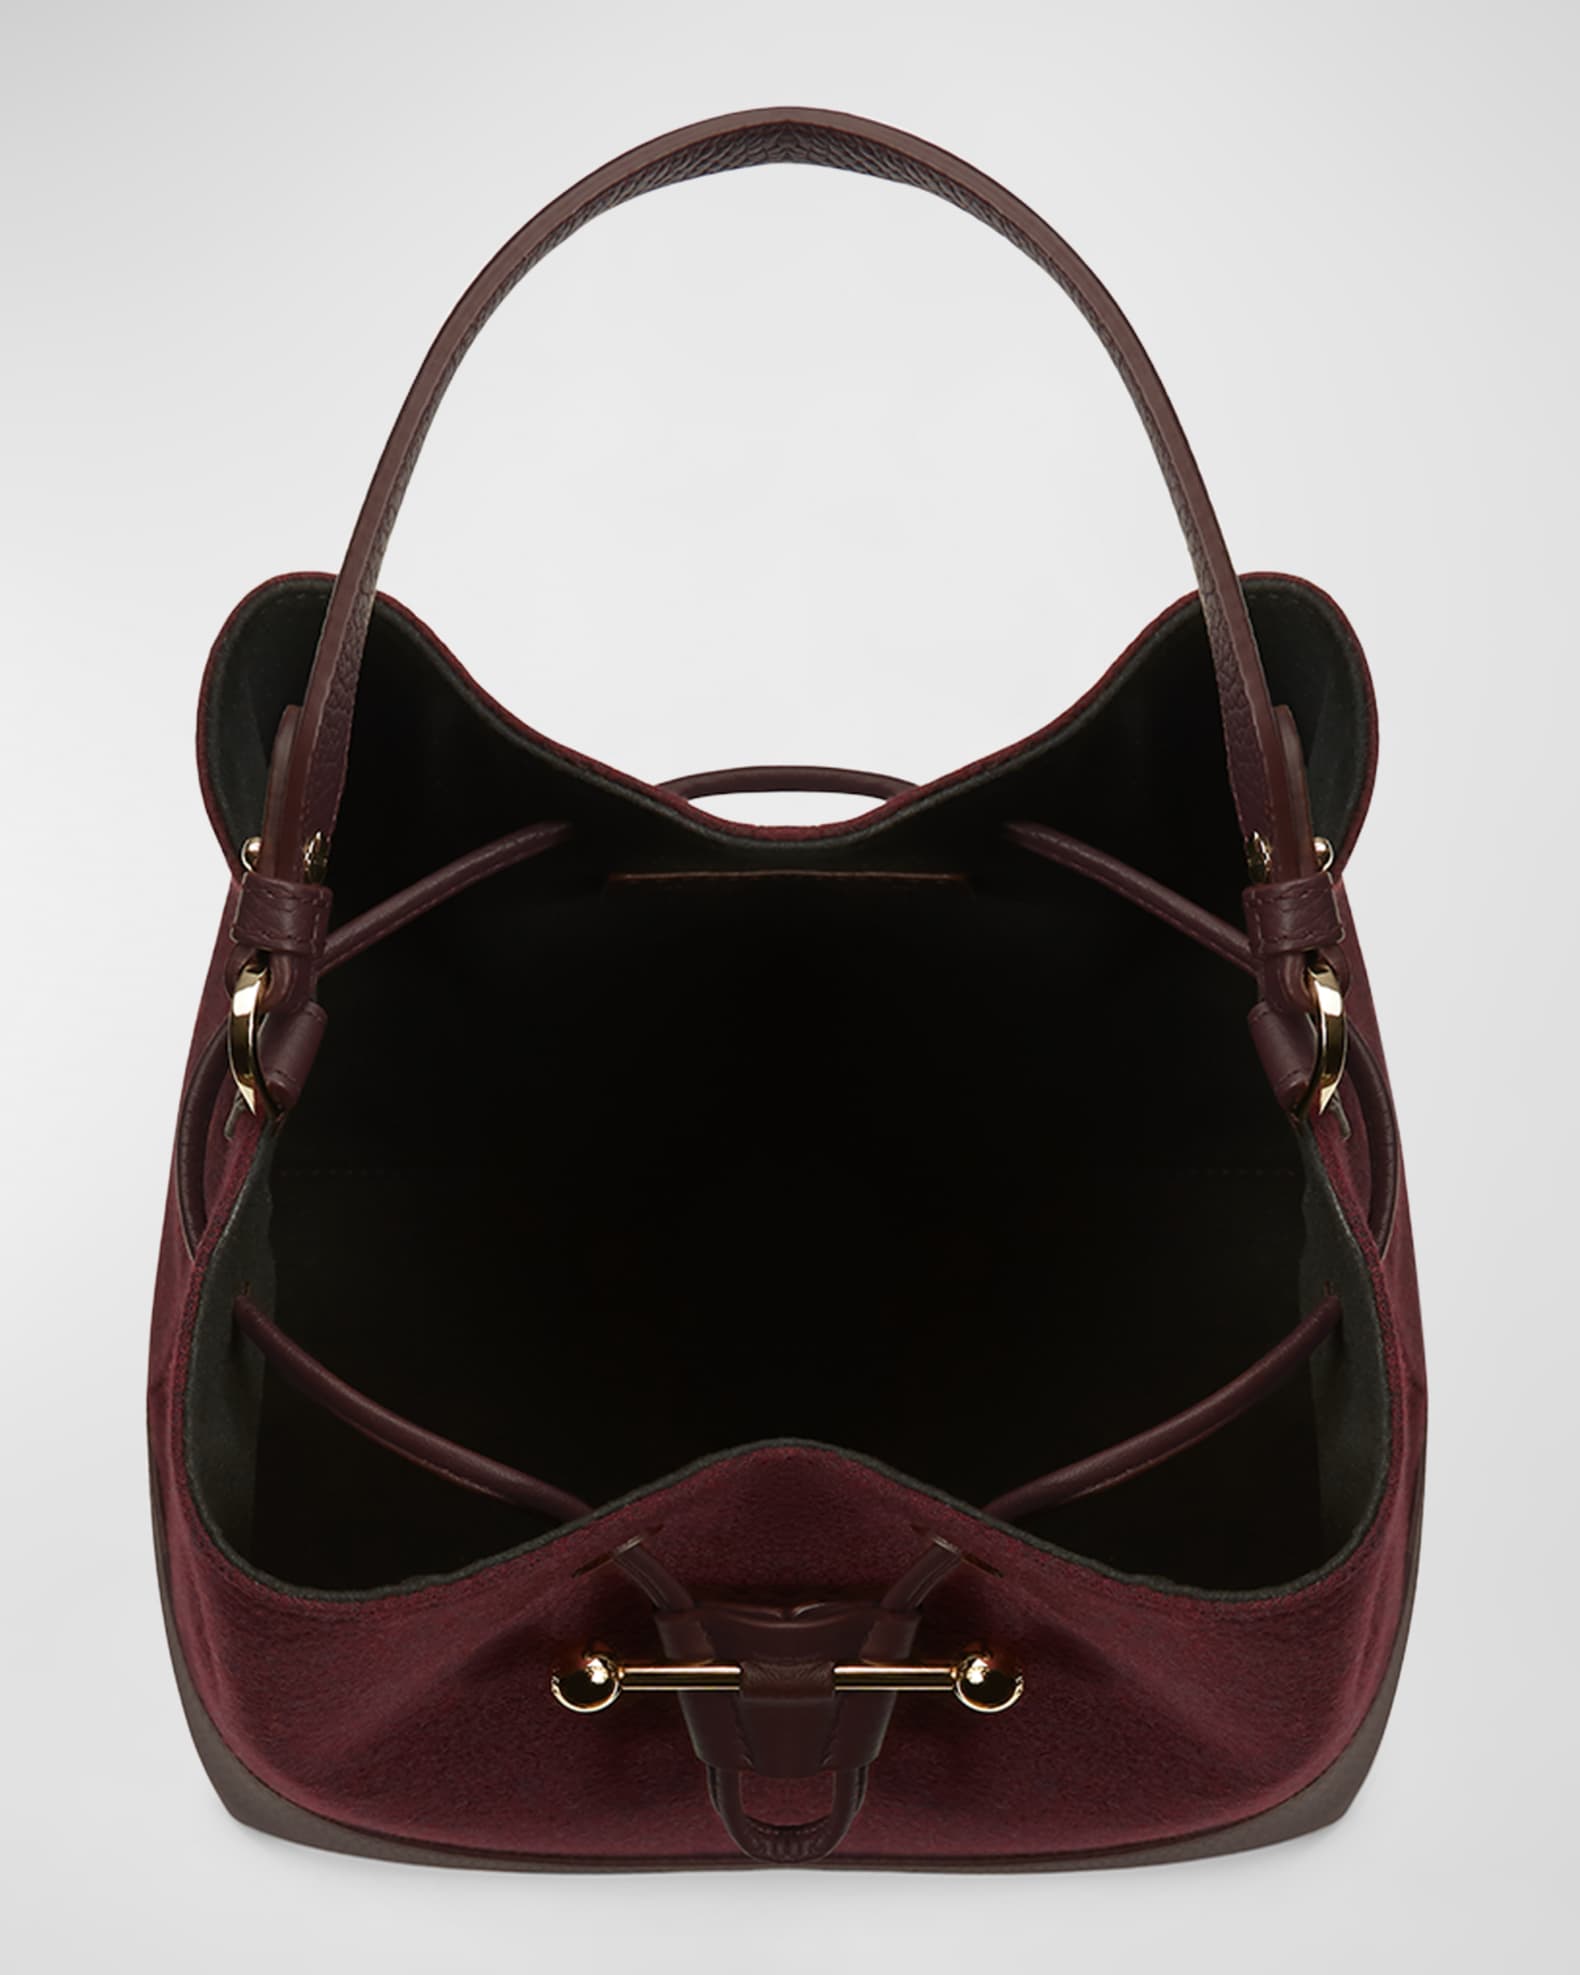 Strathberry 'lana Osette' Bucket Bag – Modecraze